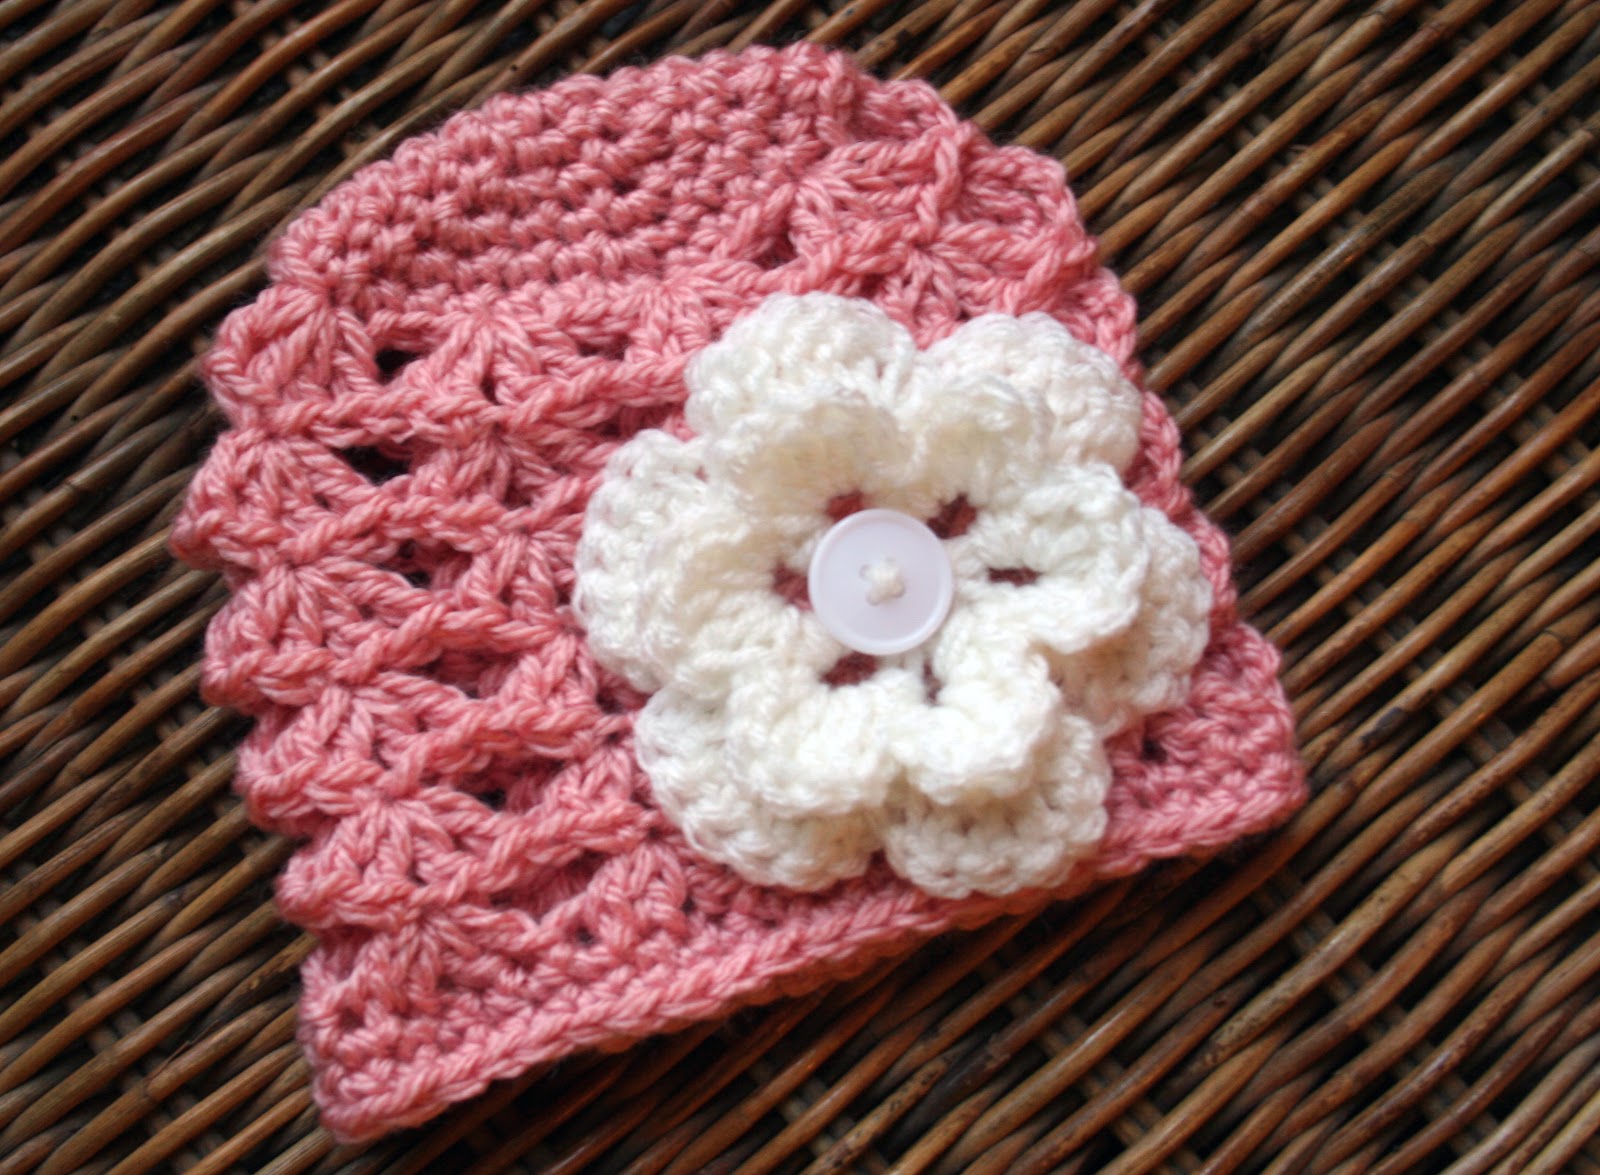 Tampa Bay Crochet: Crochet Baby Beanie with Flower